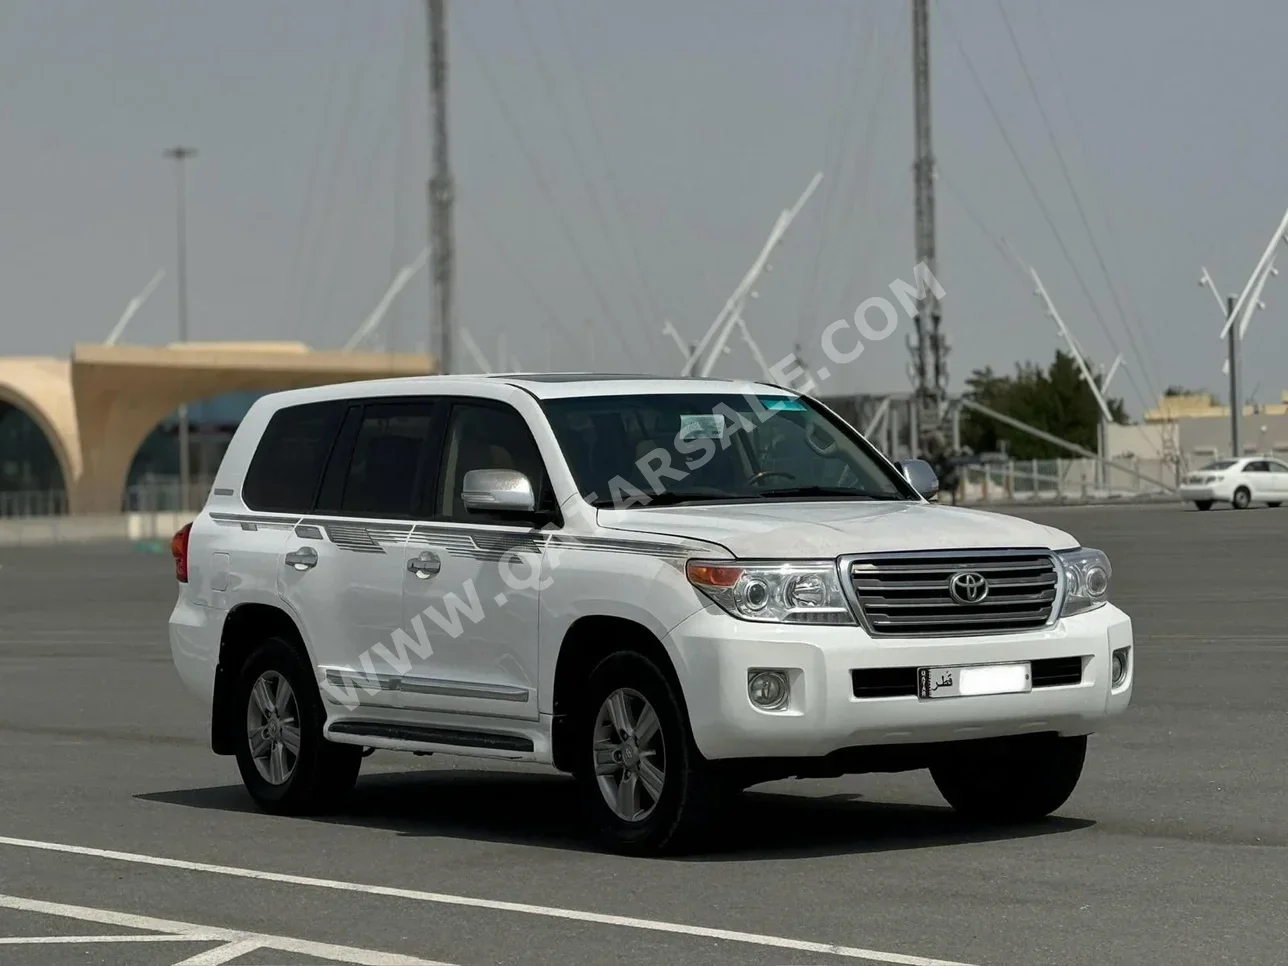 Toyota  Land Cruiser  GXR  2015  Automatic  188,000 Km  8 Cylinder  Four Wheel Drive (4WD)  SUV  White